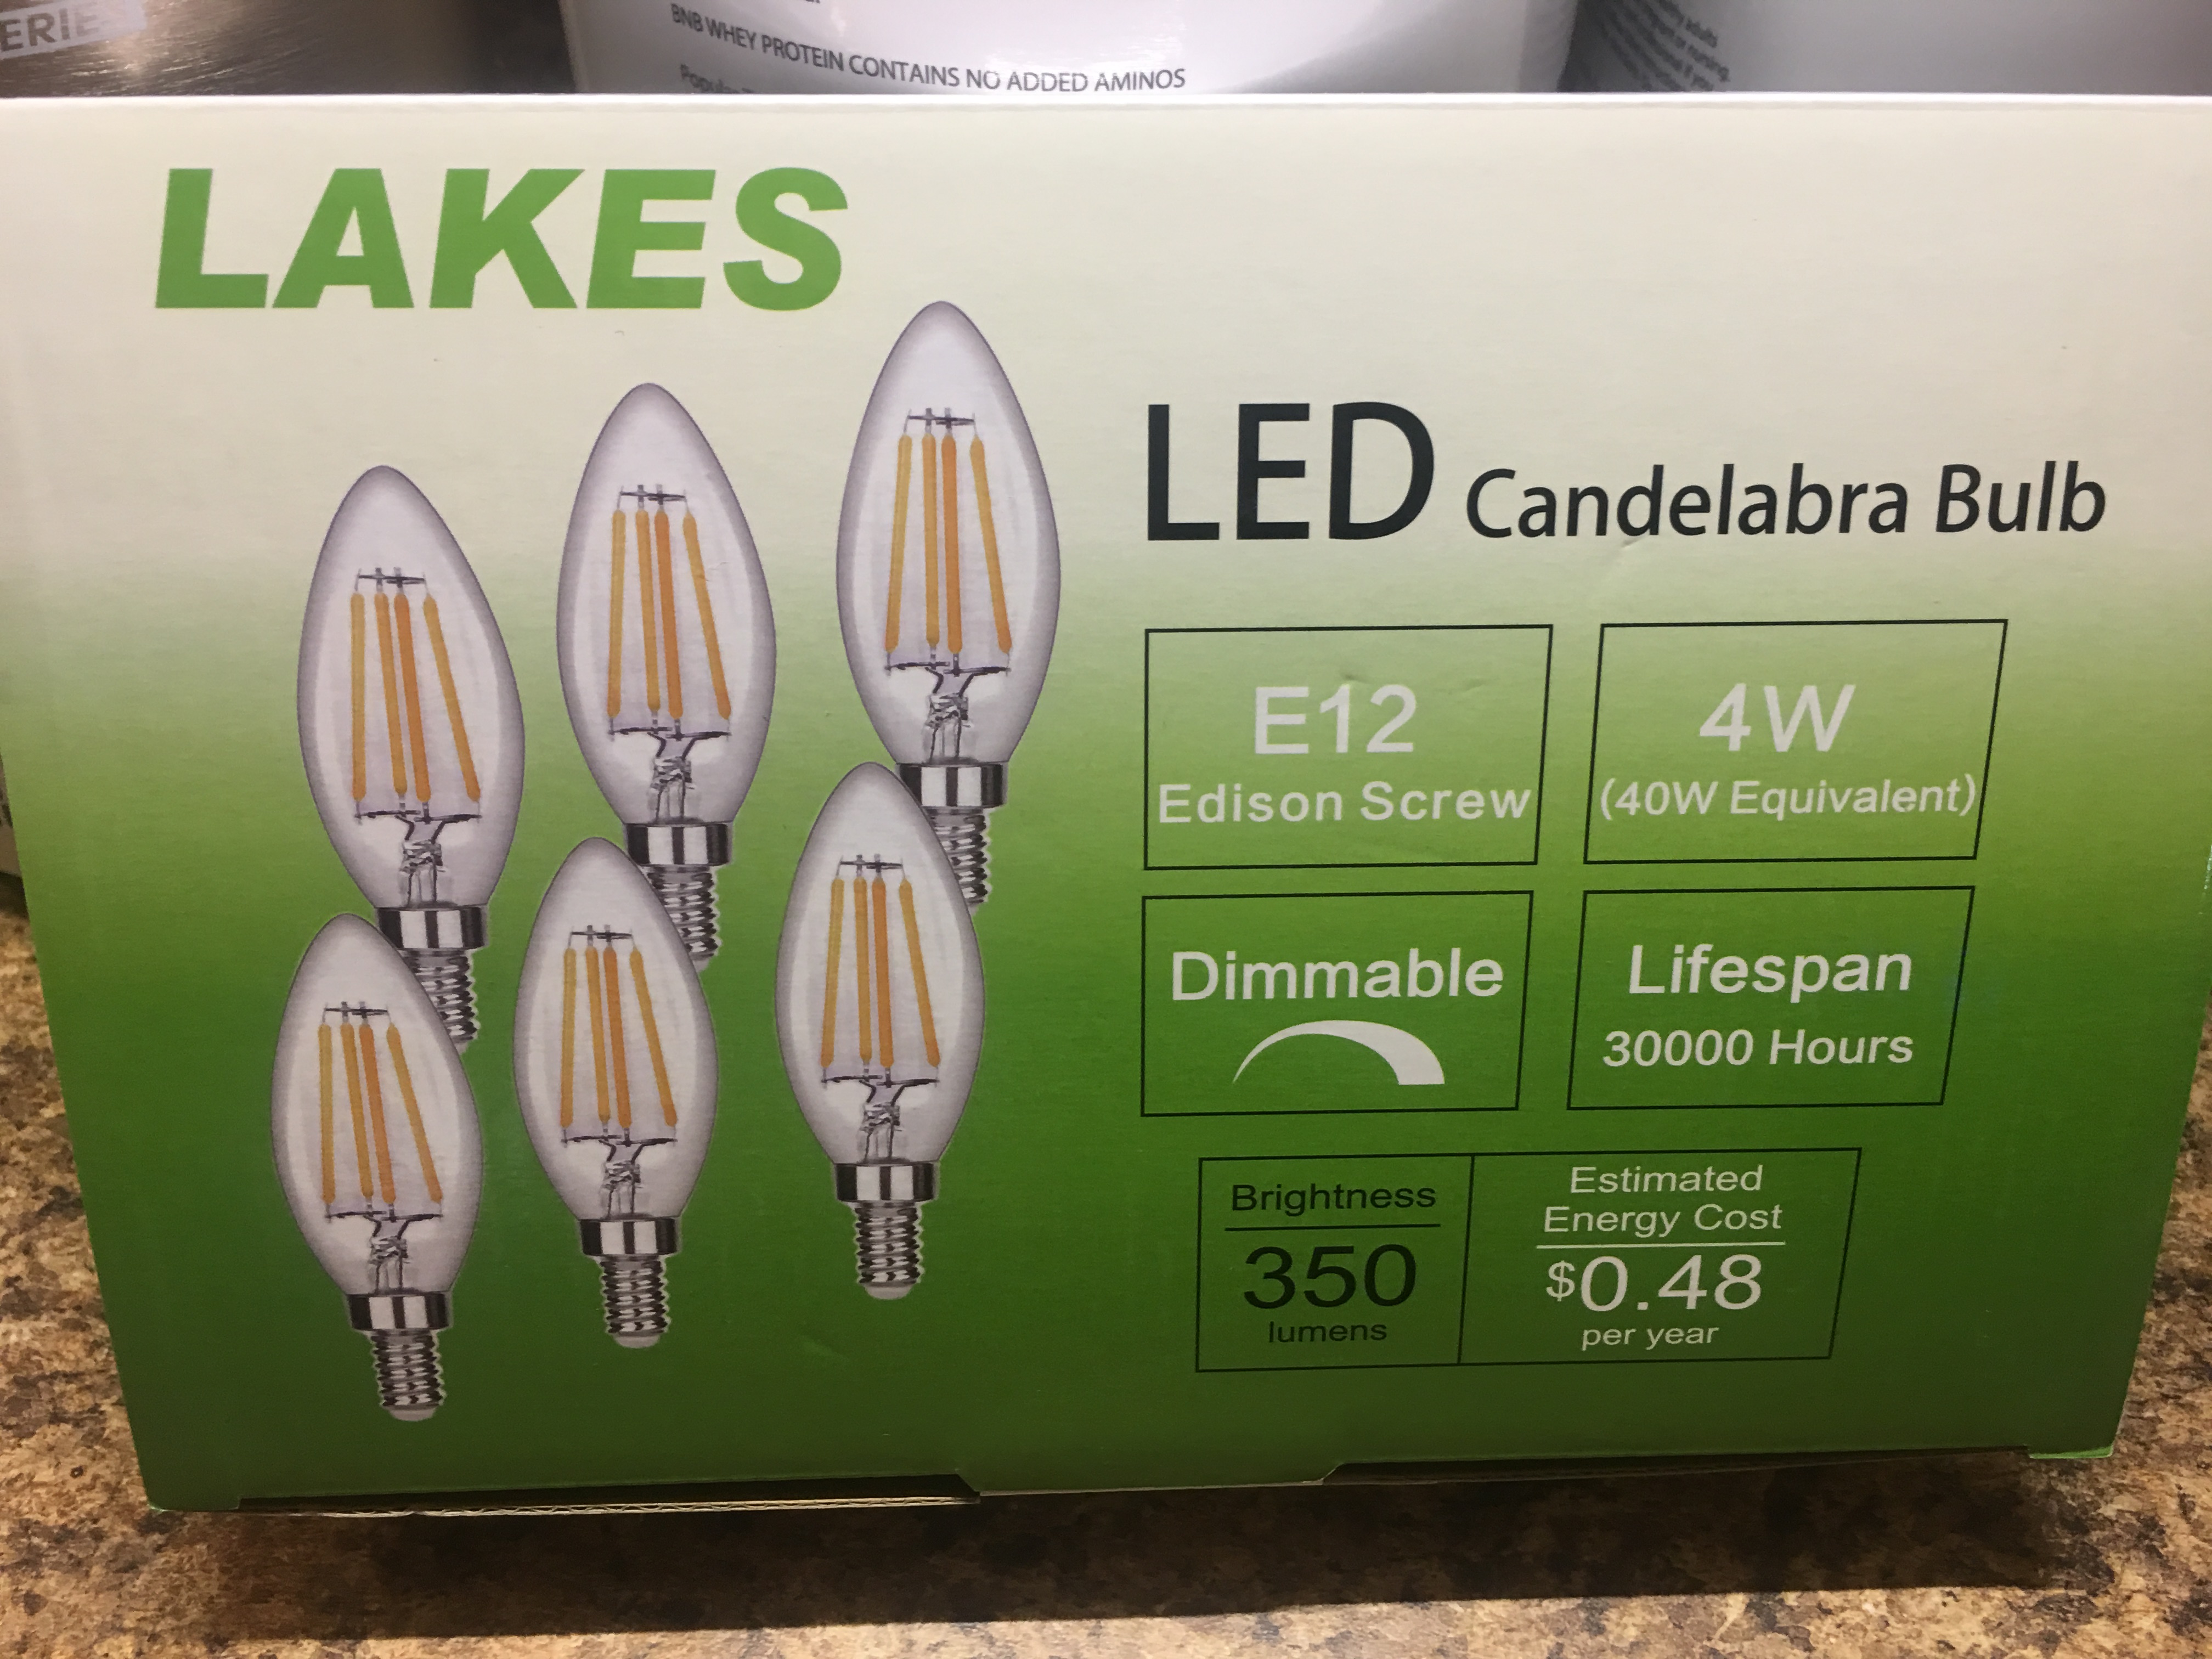 LED lights for your quality lighting needs